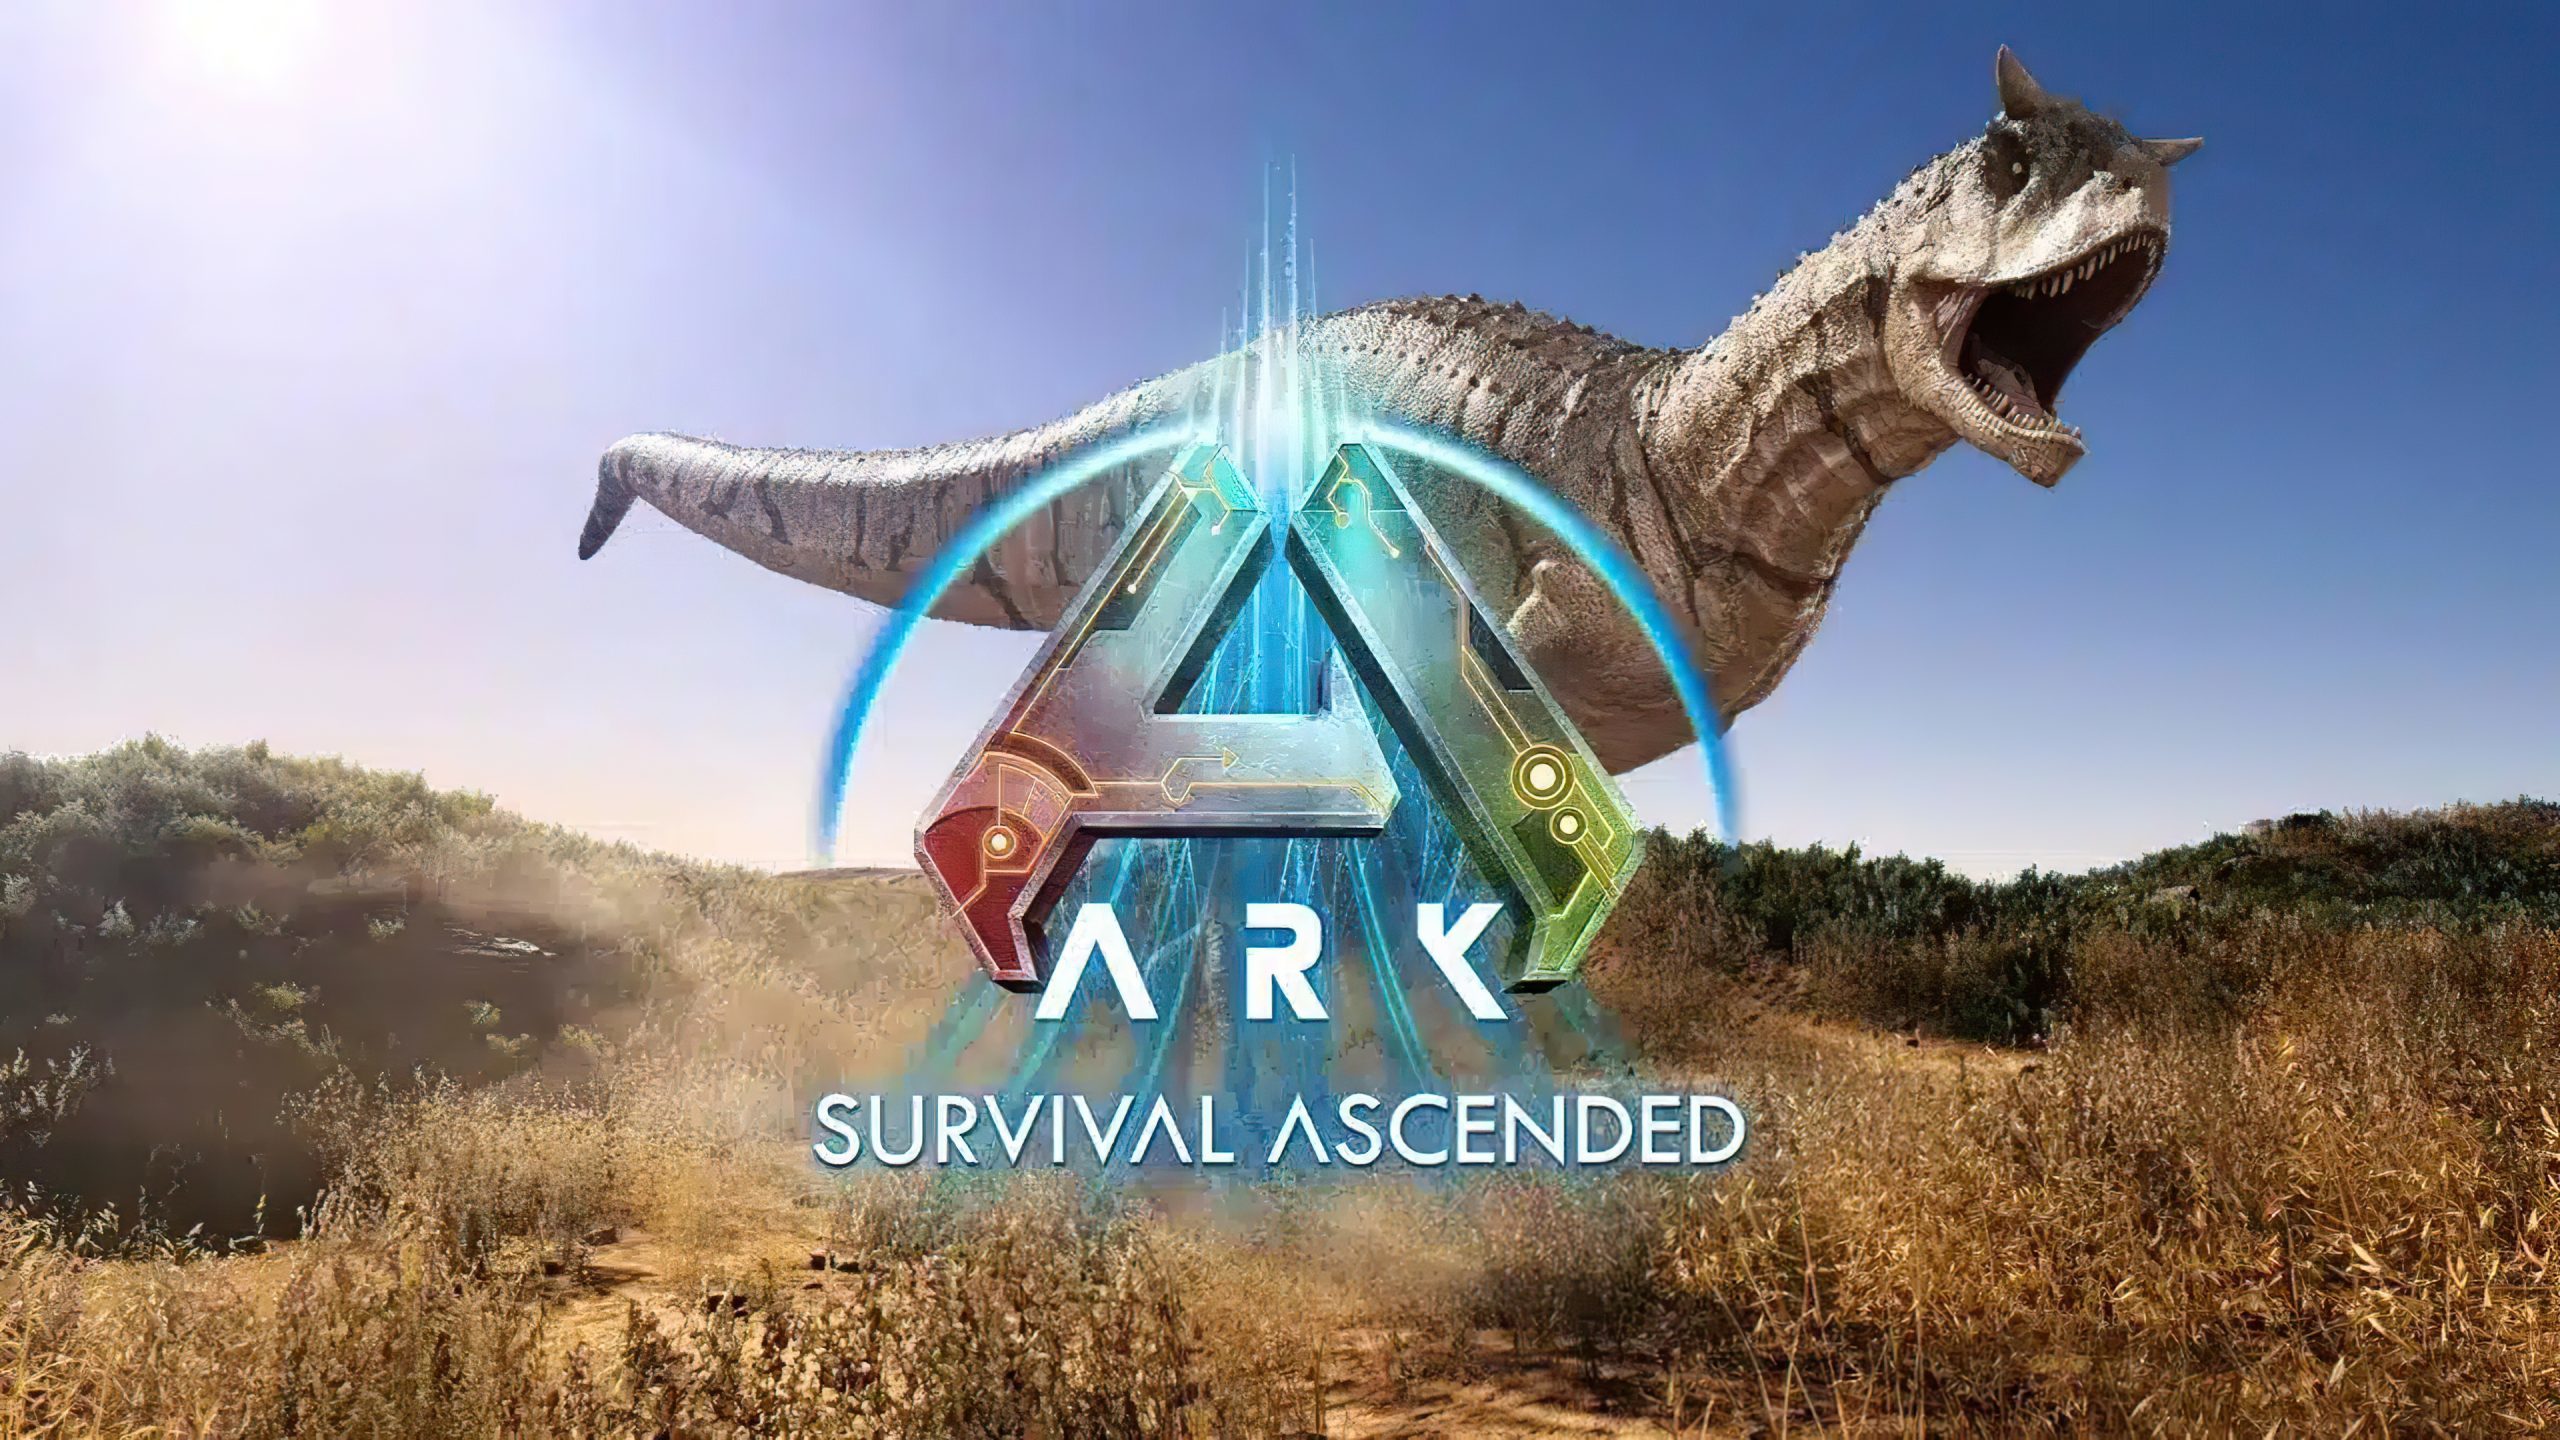 Ark-Survival-Ascended-HD-scaled.jpg